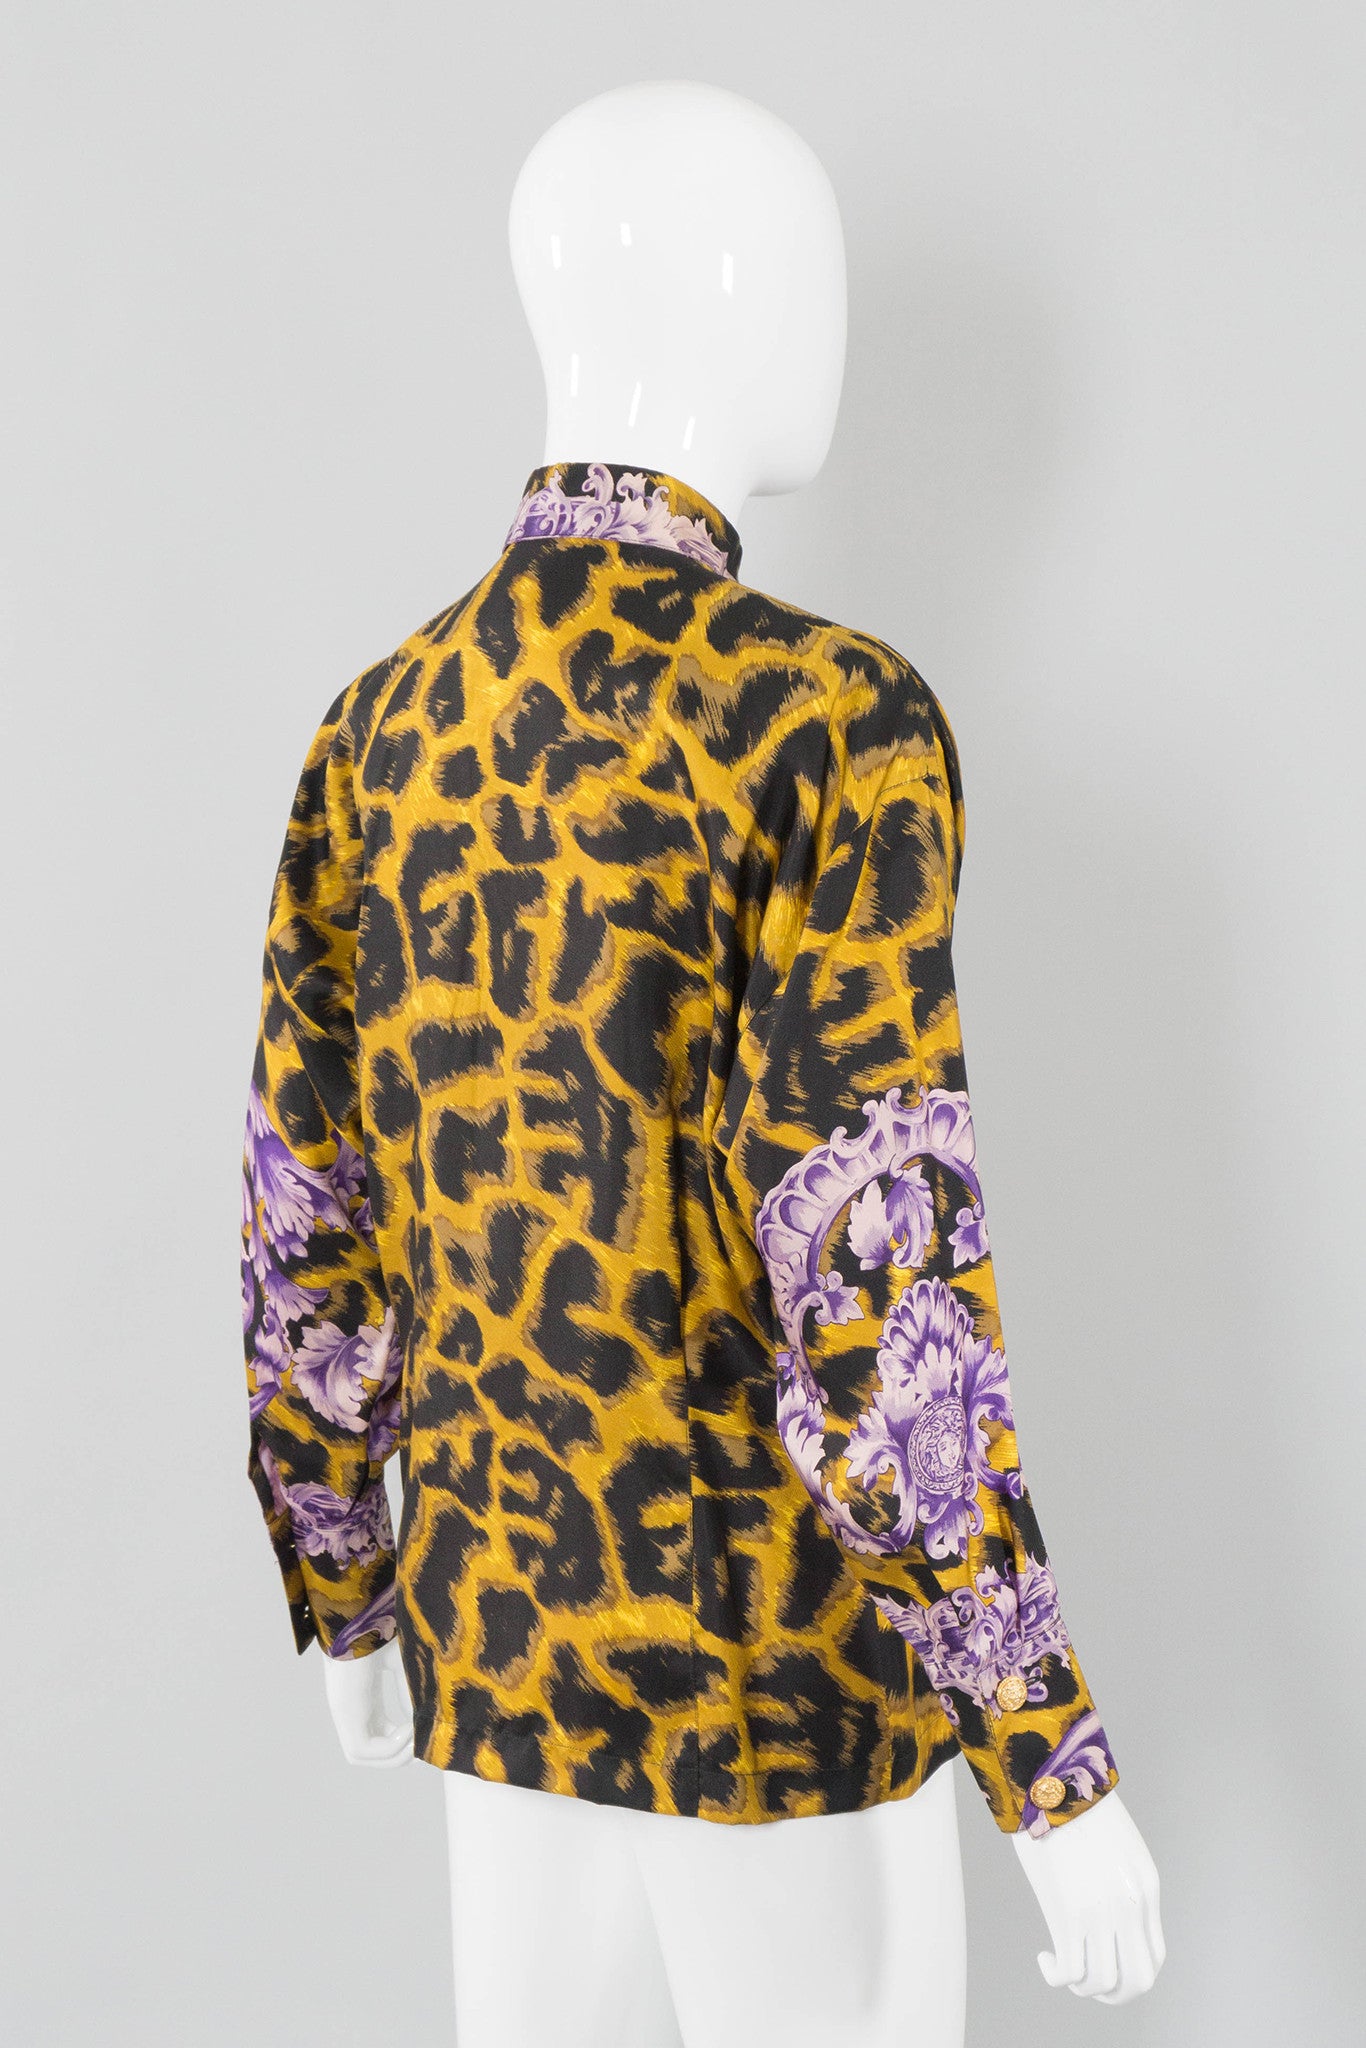 Gianni Versace Cheetah Flourish Print Blouse Side Back